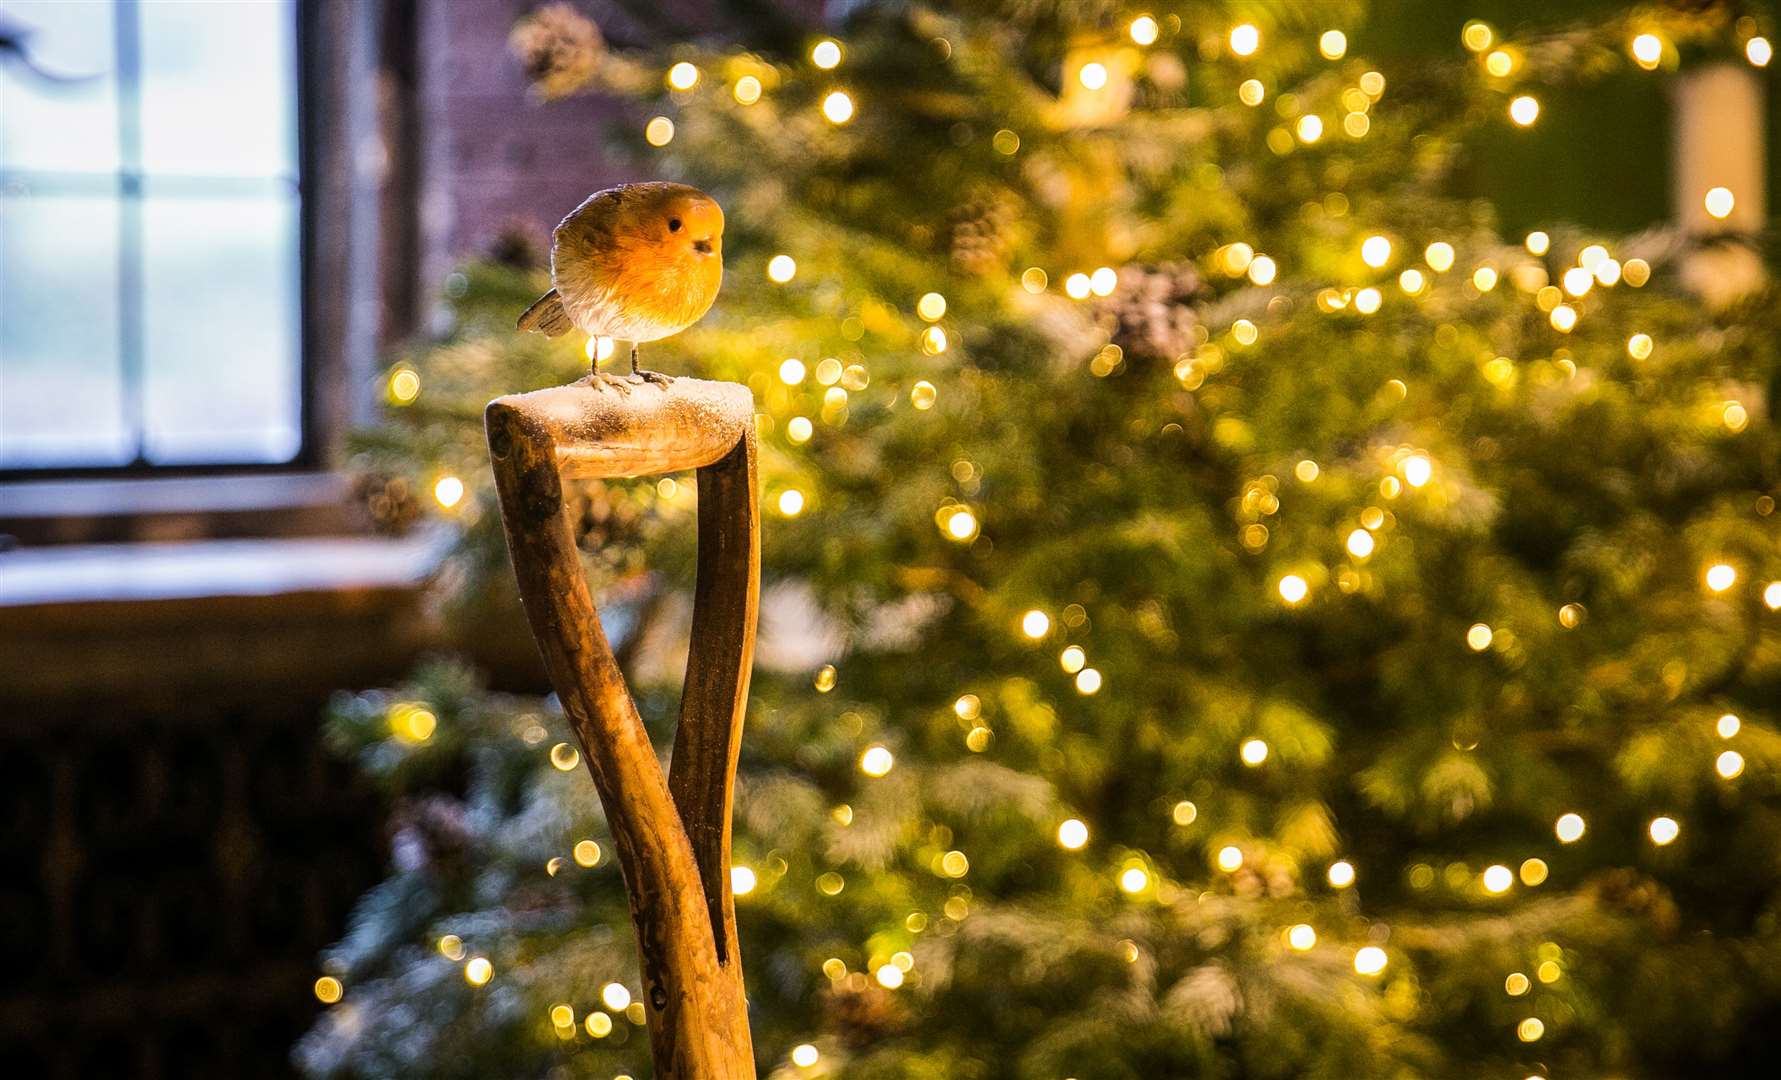 Leeds Castle's Christmas display